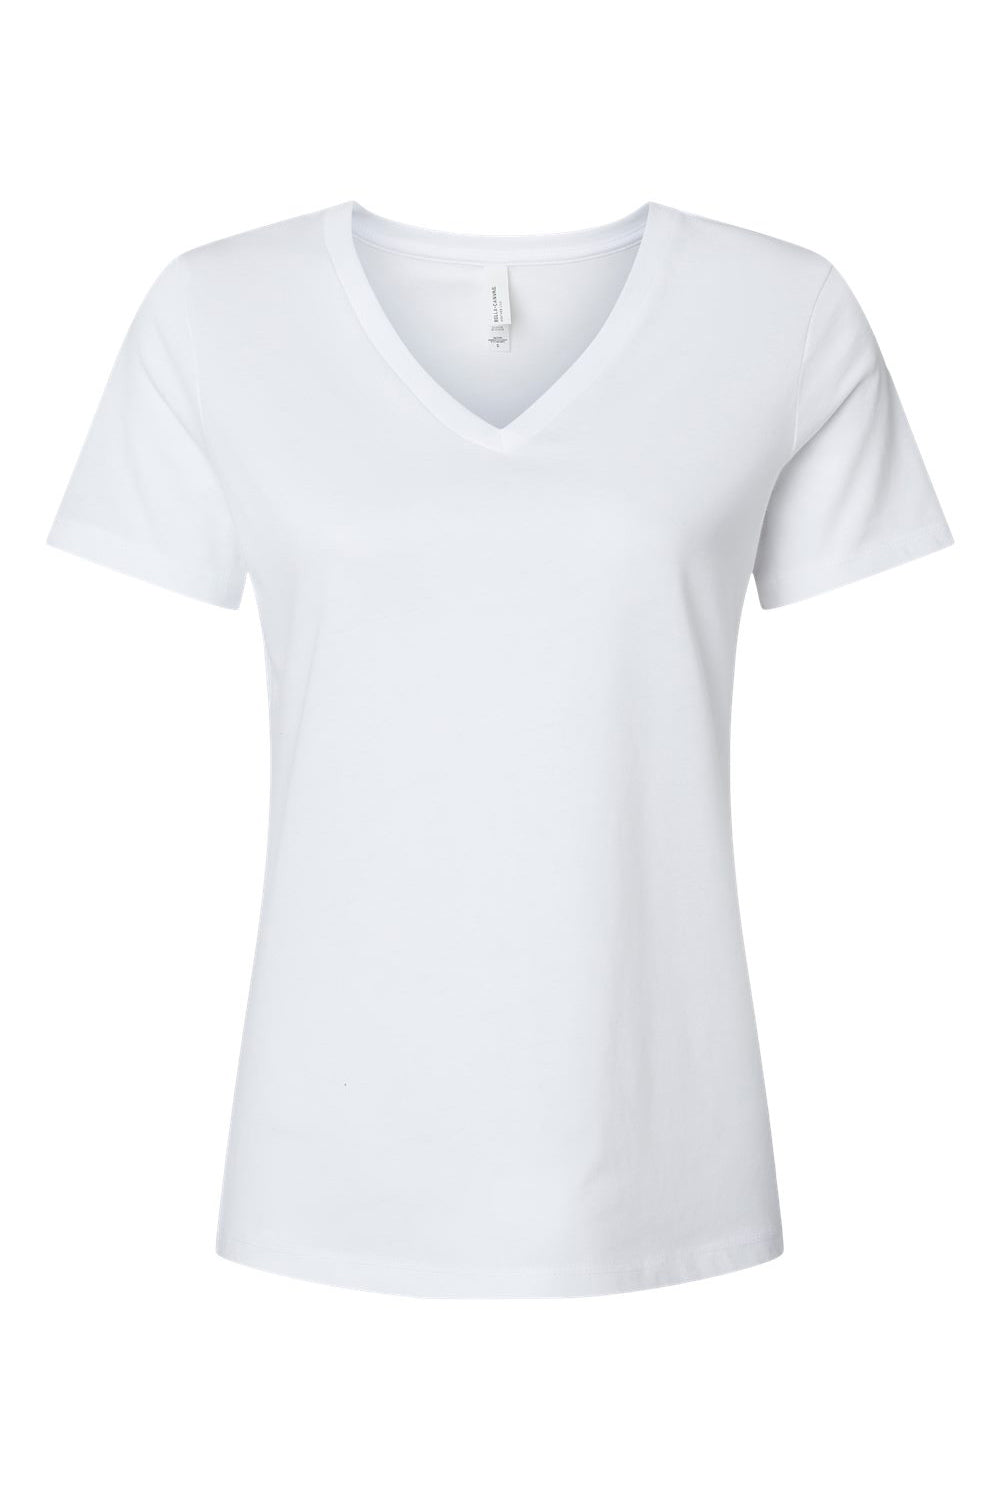 Bella + Canvas BC6405CVC Womens CVC Short Sleeve V-Neck T-Shirt Solid White Flat Front